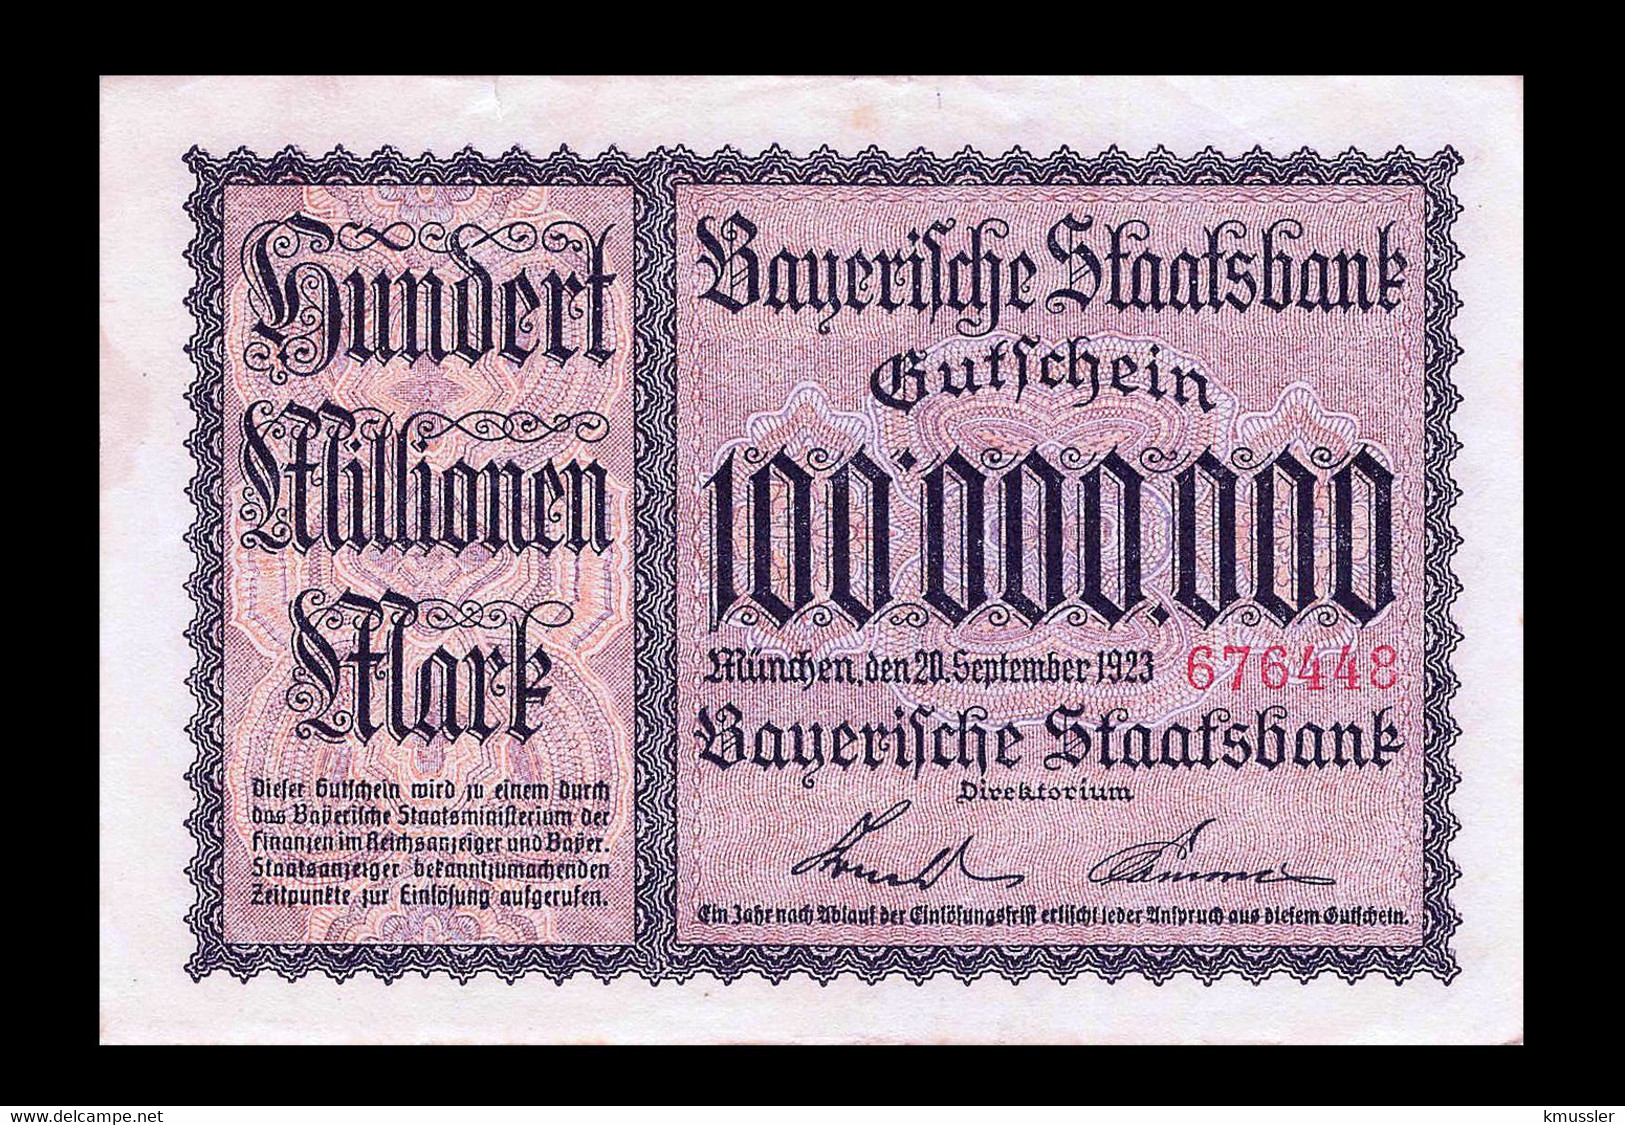 # # # Banknote Bayerische Staatsbank 100.000.000 Mark 1923 UNC # # # - Non Classificati